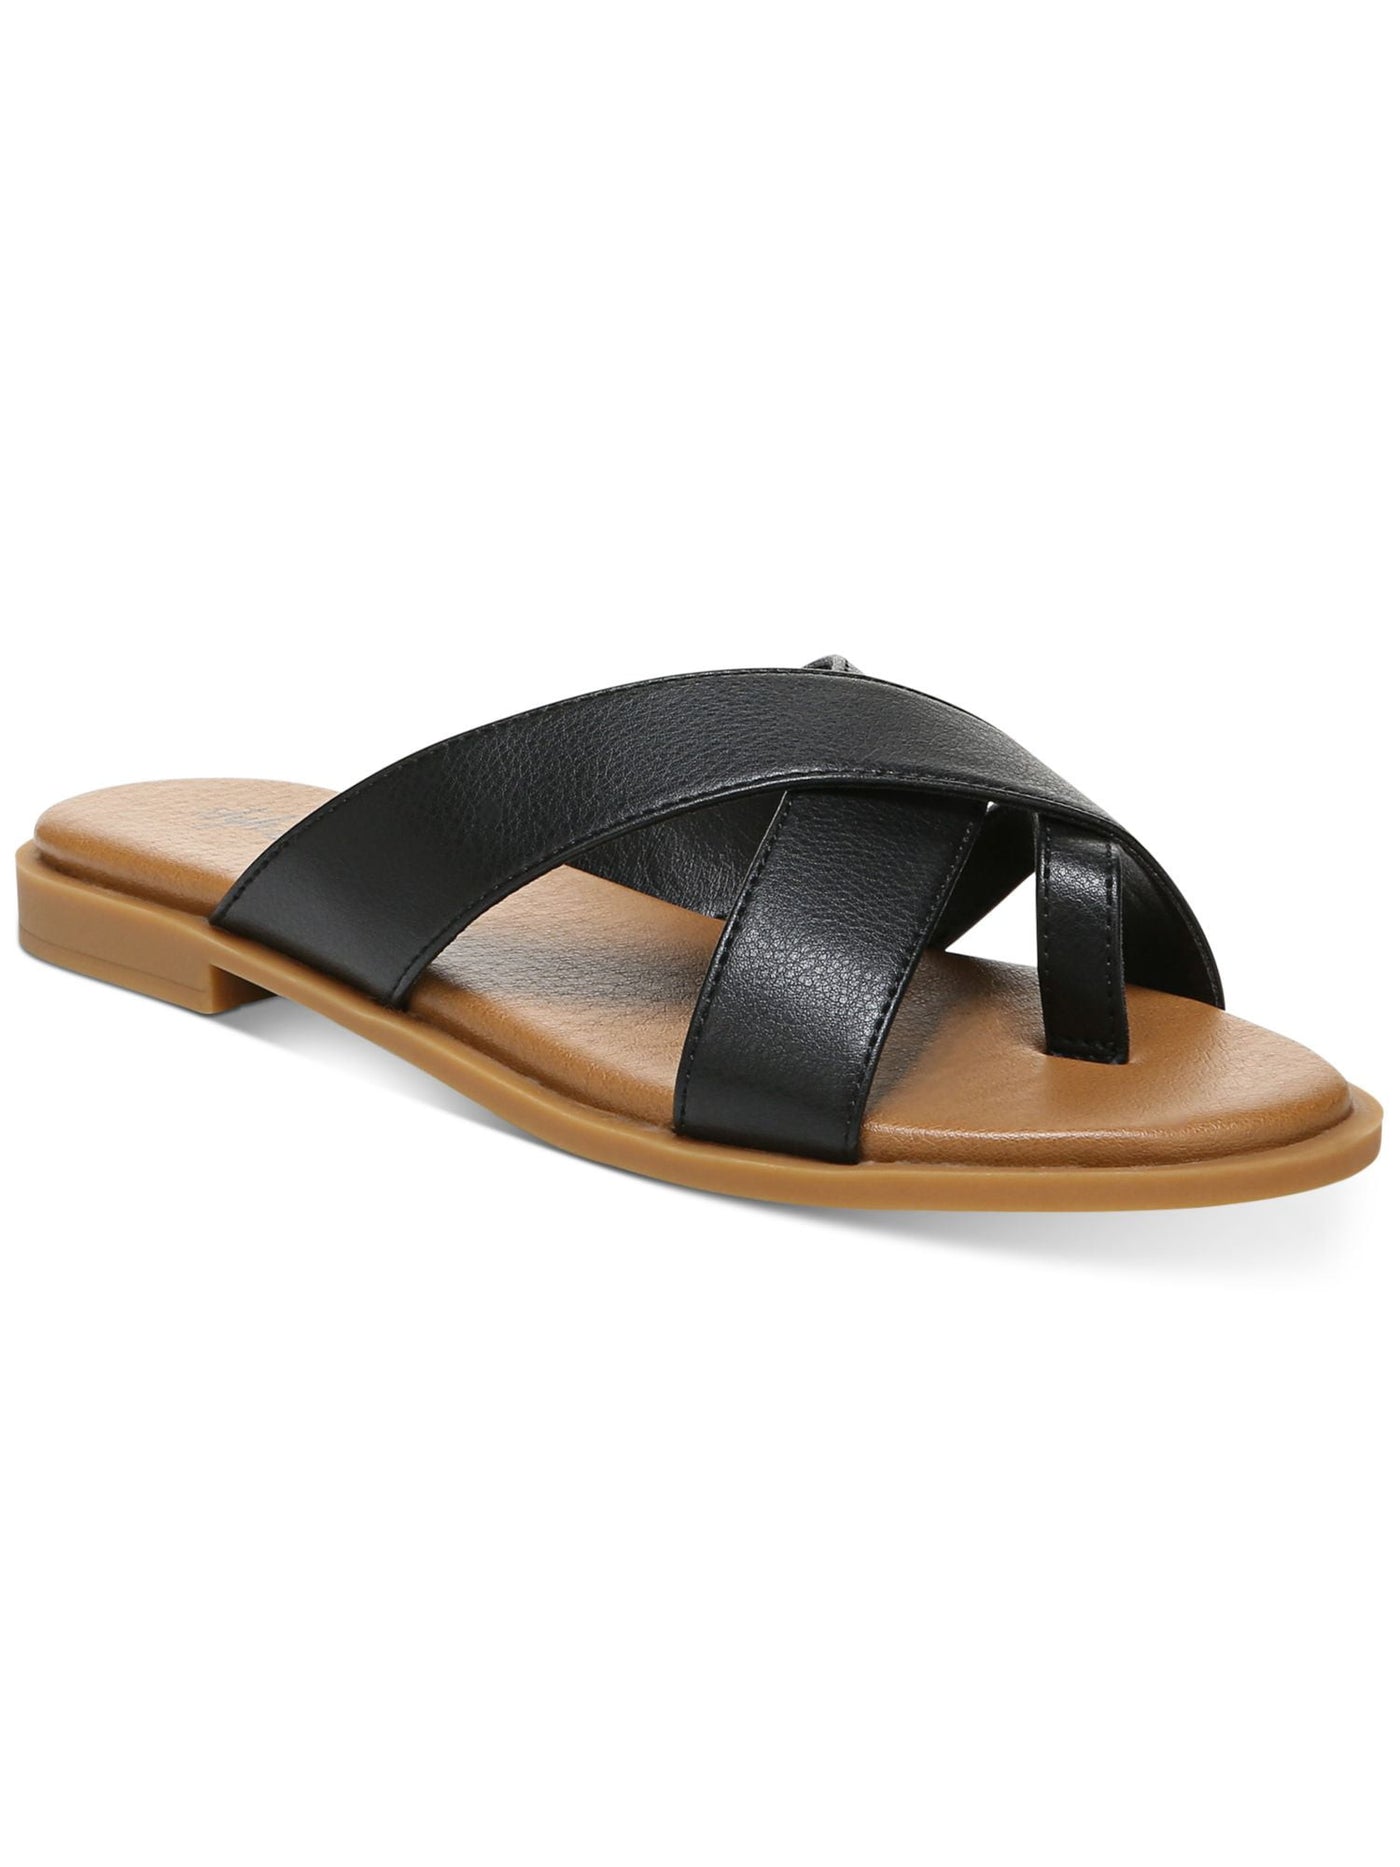 STYLE & COMPANY Womens Black Crisscross Straps Toe-Ring Cushioned Carolyn Round Toe Block Heel Slip On Slide Sandals Shoes 7 M